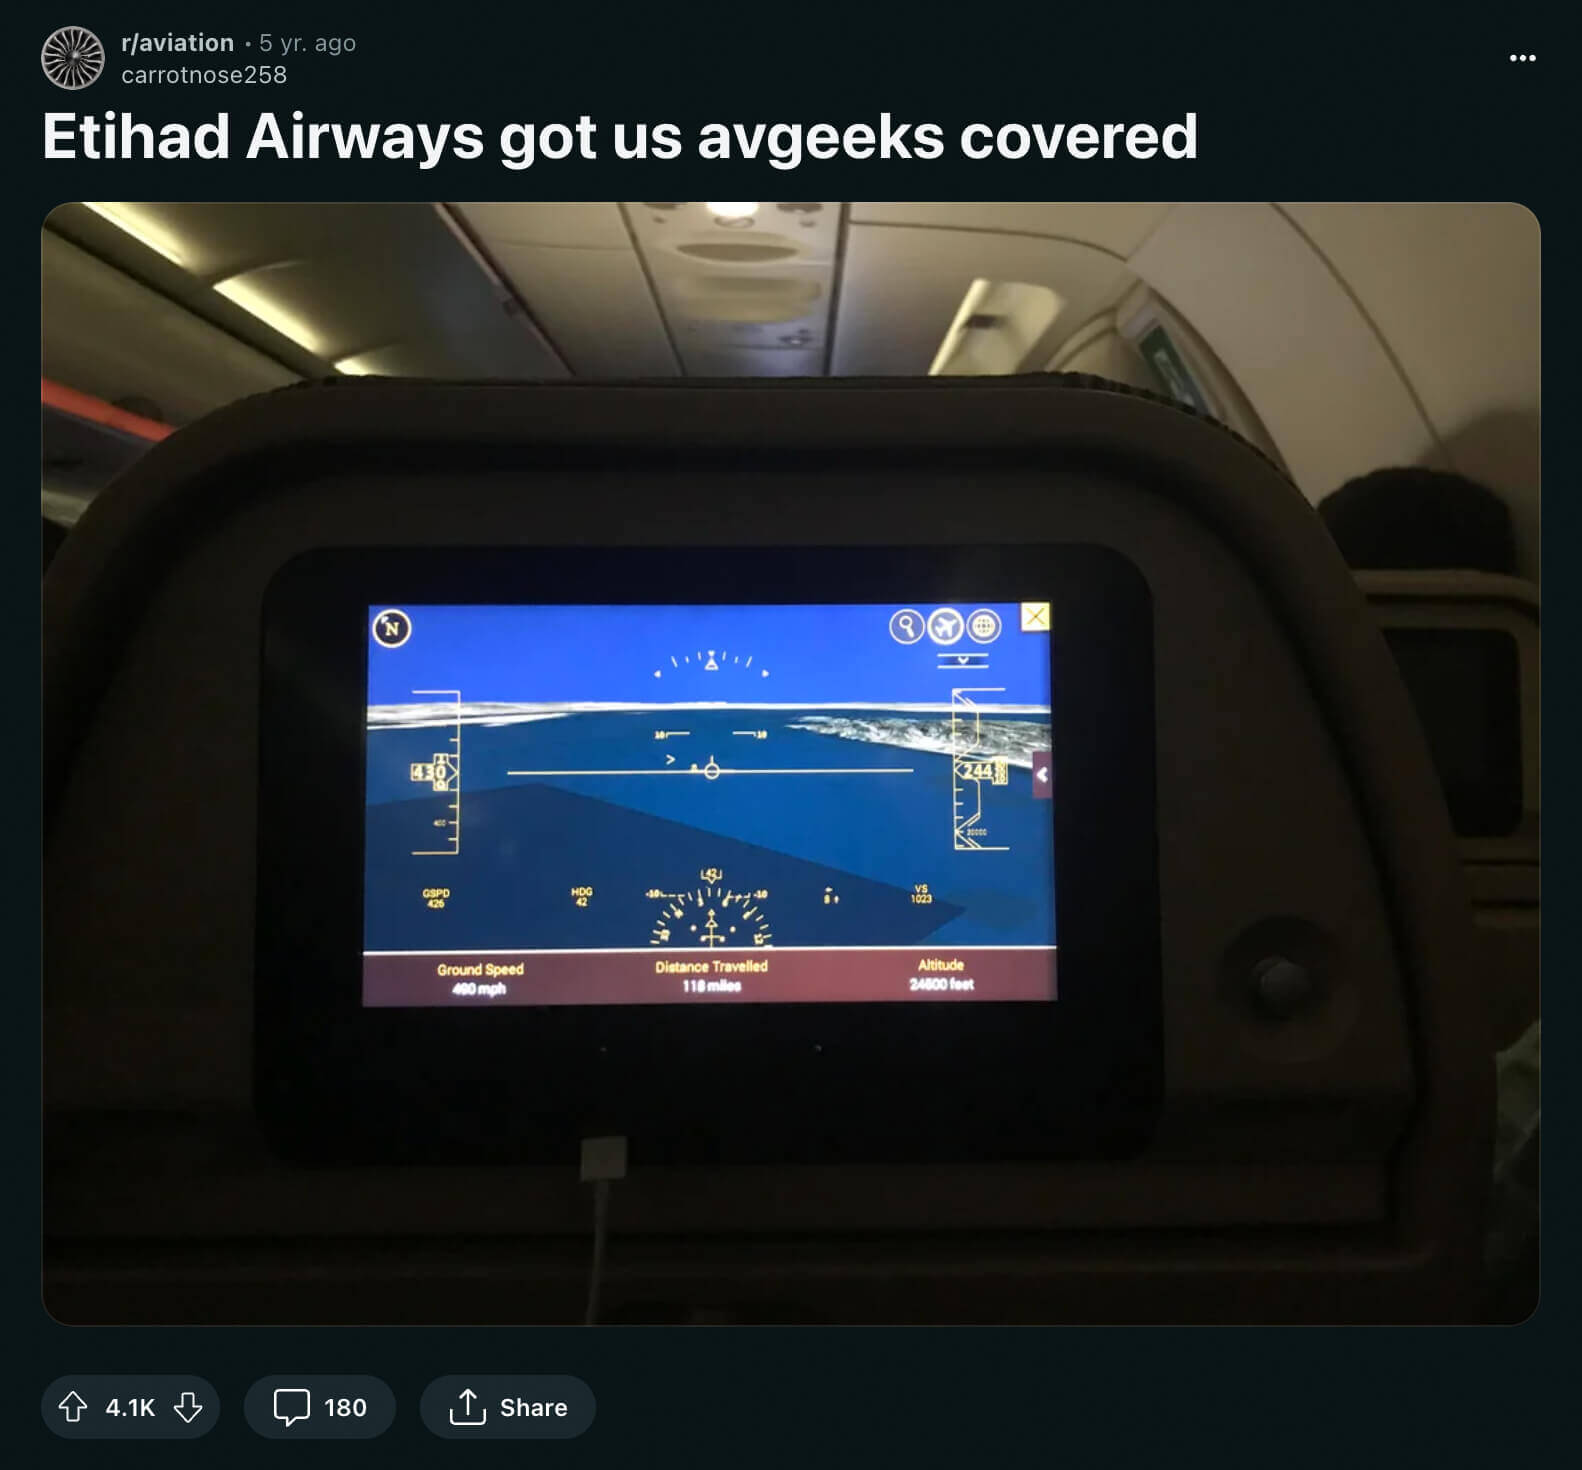 Avgeek's appreciation for Eithad Airways